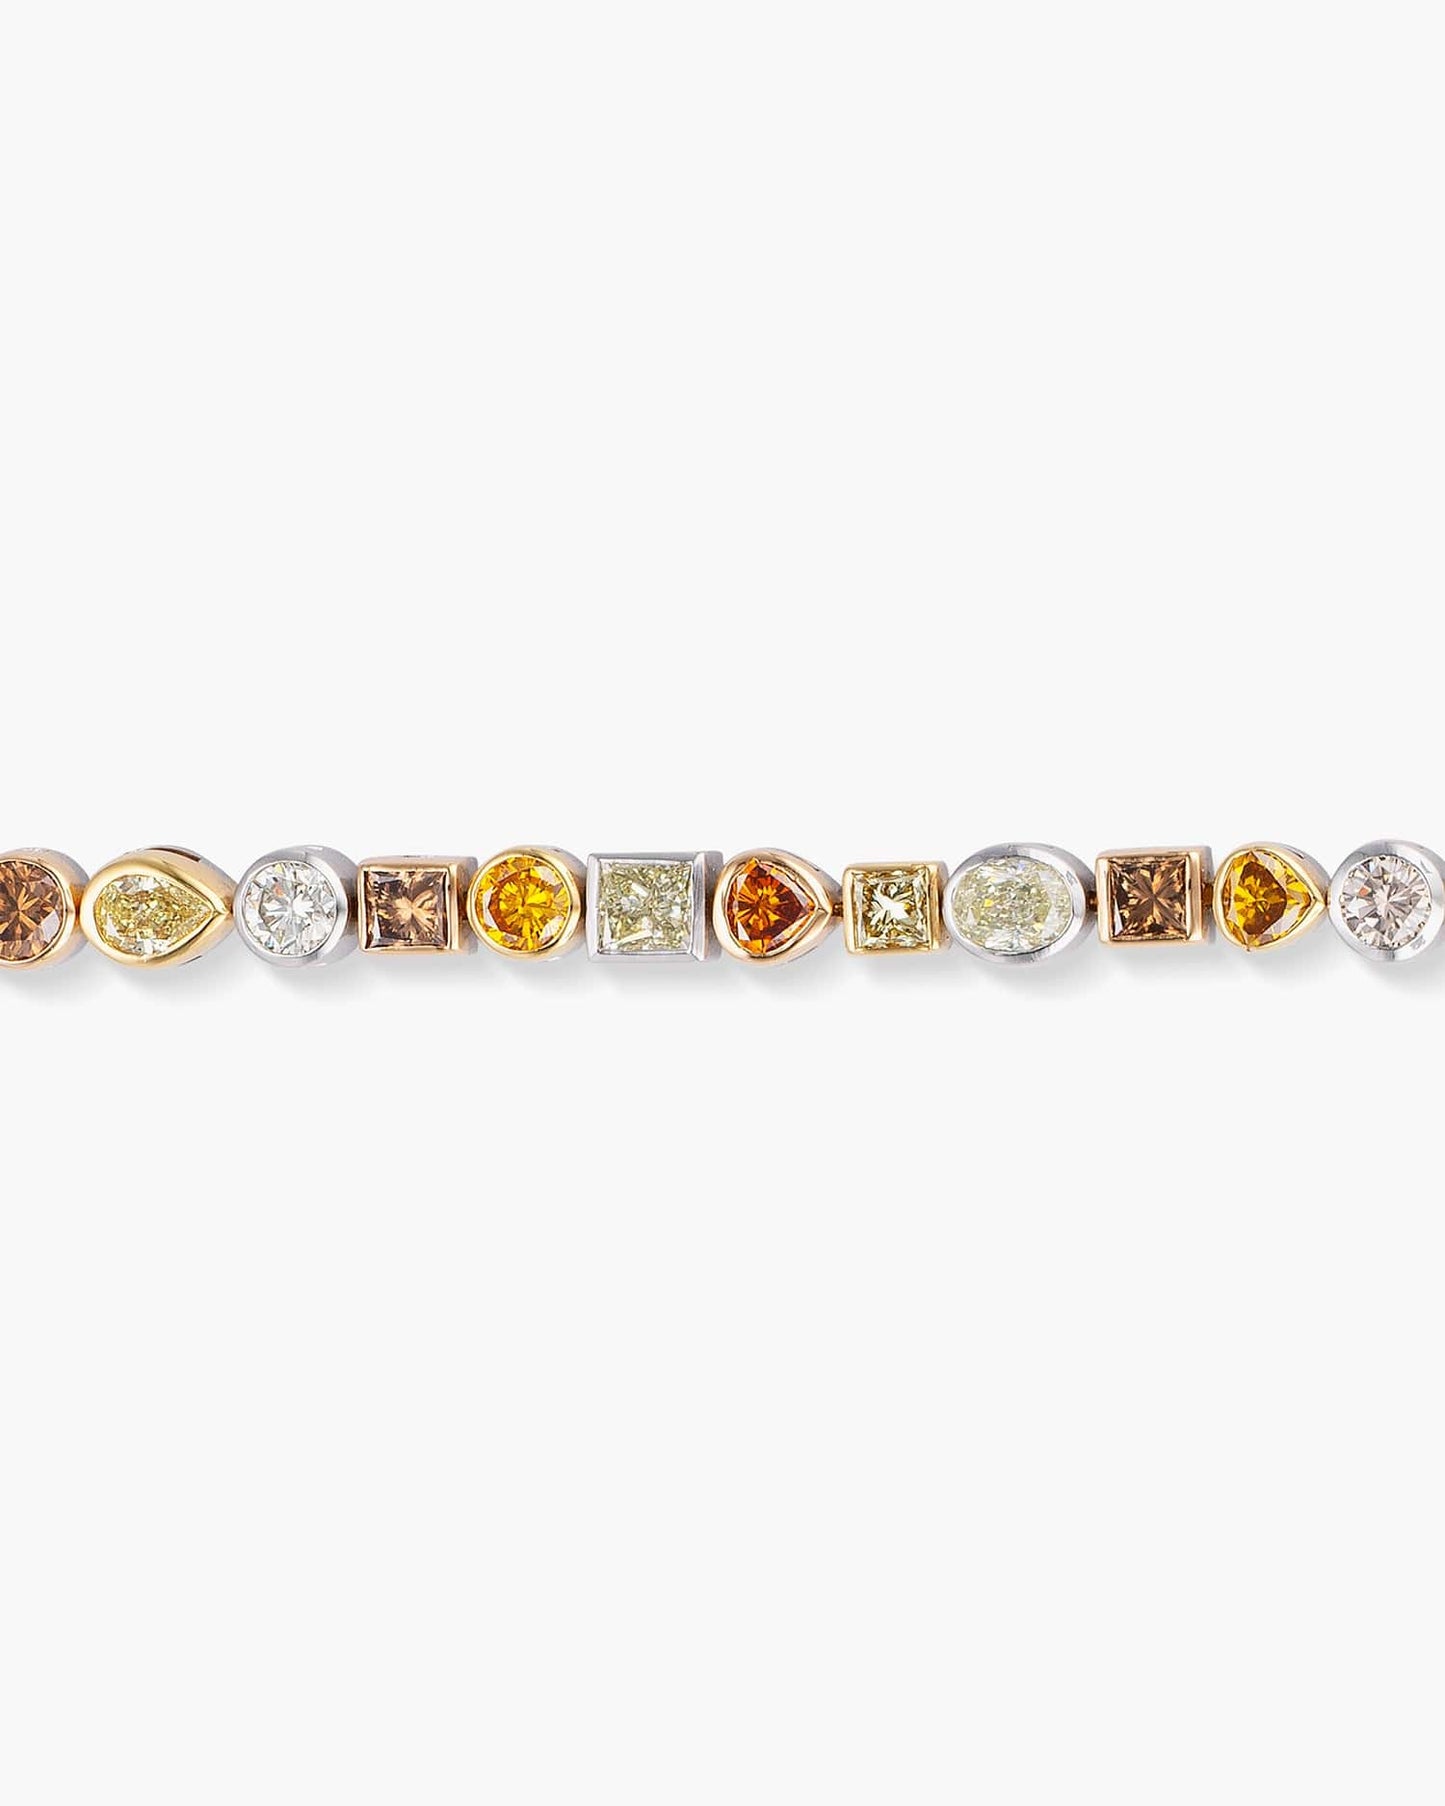 Buy 1 Ct. Tw Diamond Bracelet, Oval Open Link Fancy Ladies Diamond Bracelet,  14 Kt. White Gold Ladies Bracelet Online in India - Etsy